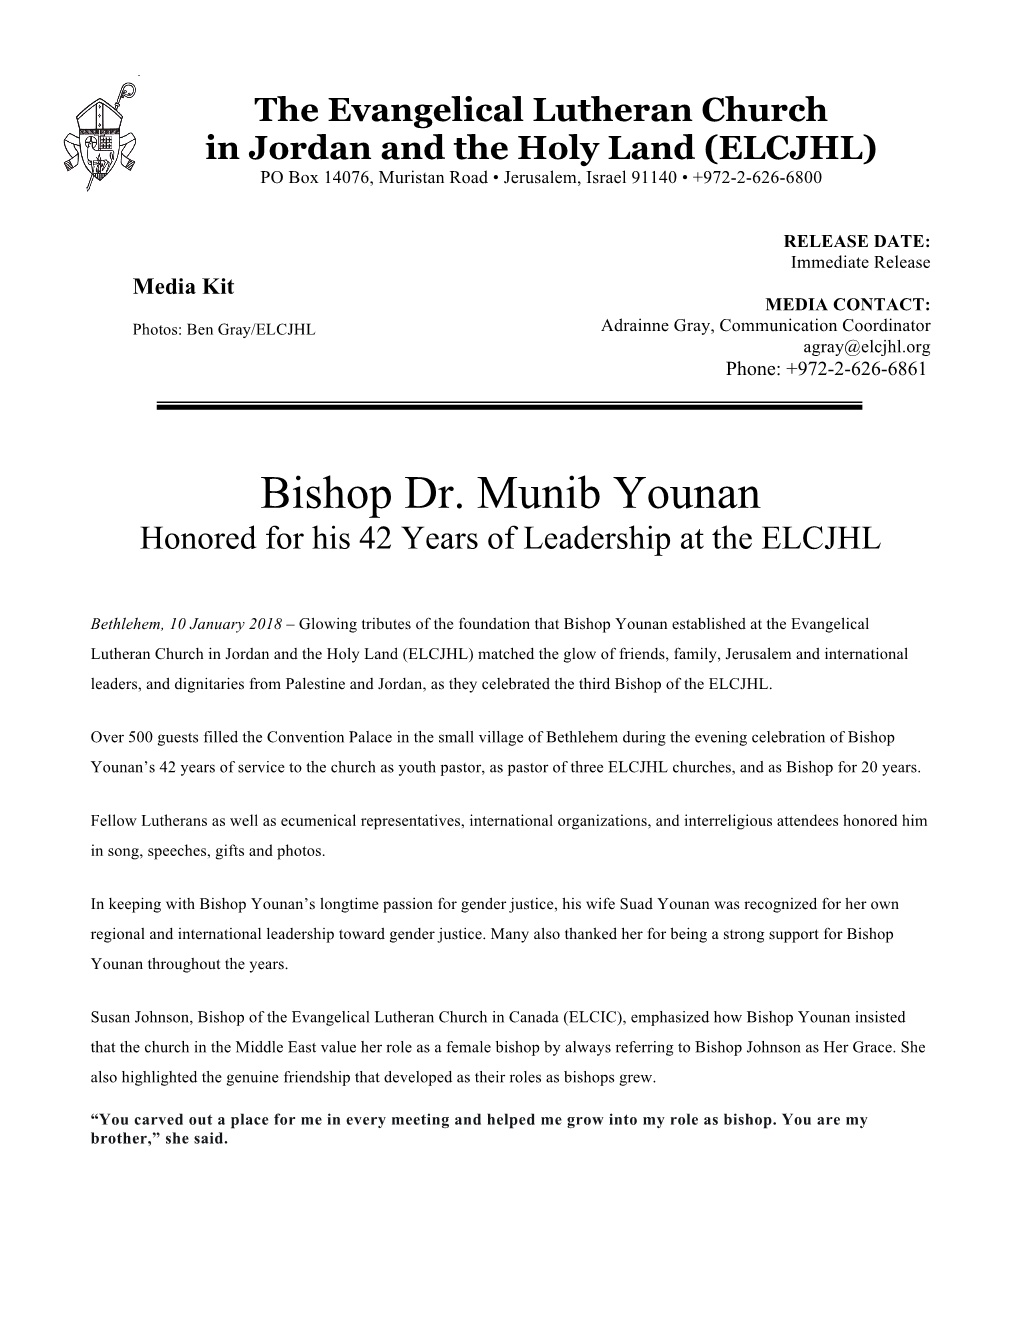 Bishop Dr. Munib Younan Honored for His 42 Years of Leadership at the ELCJHL